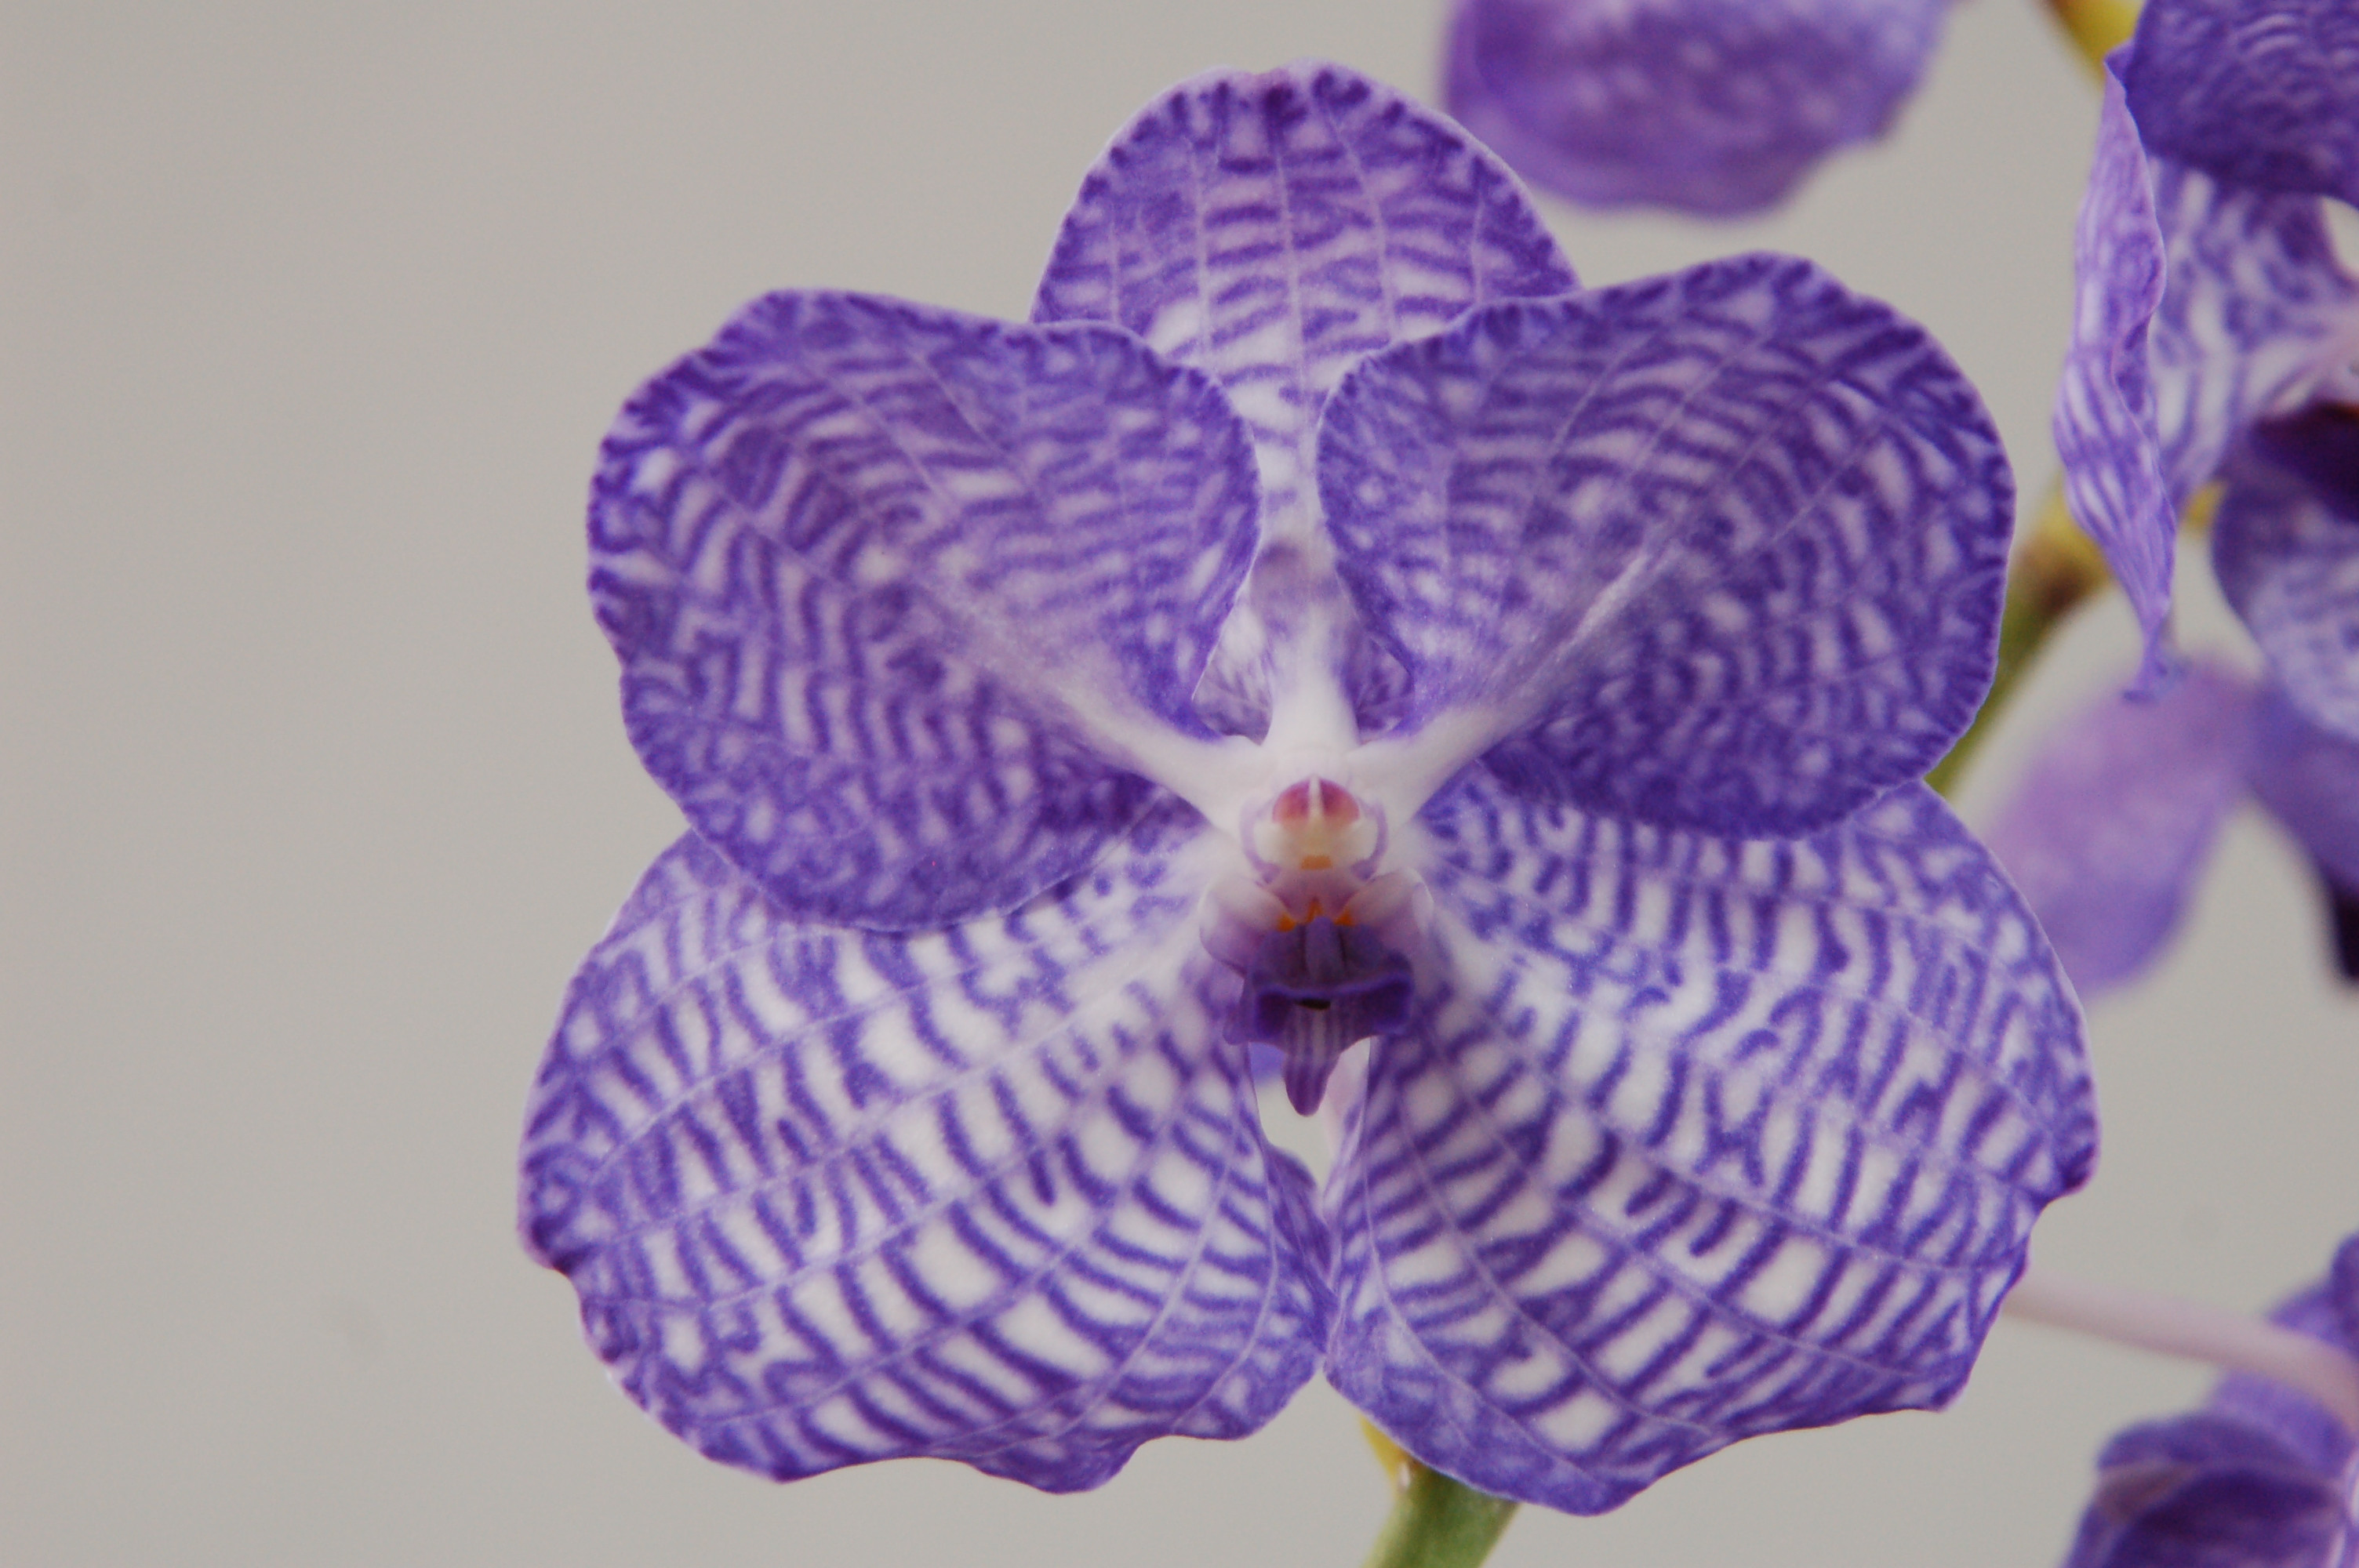 Vanda coerulea | Orchideen-Wichmann.de - Highest horticultural quality and  experience since 1897